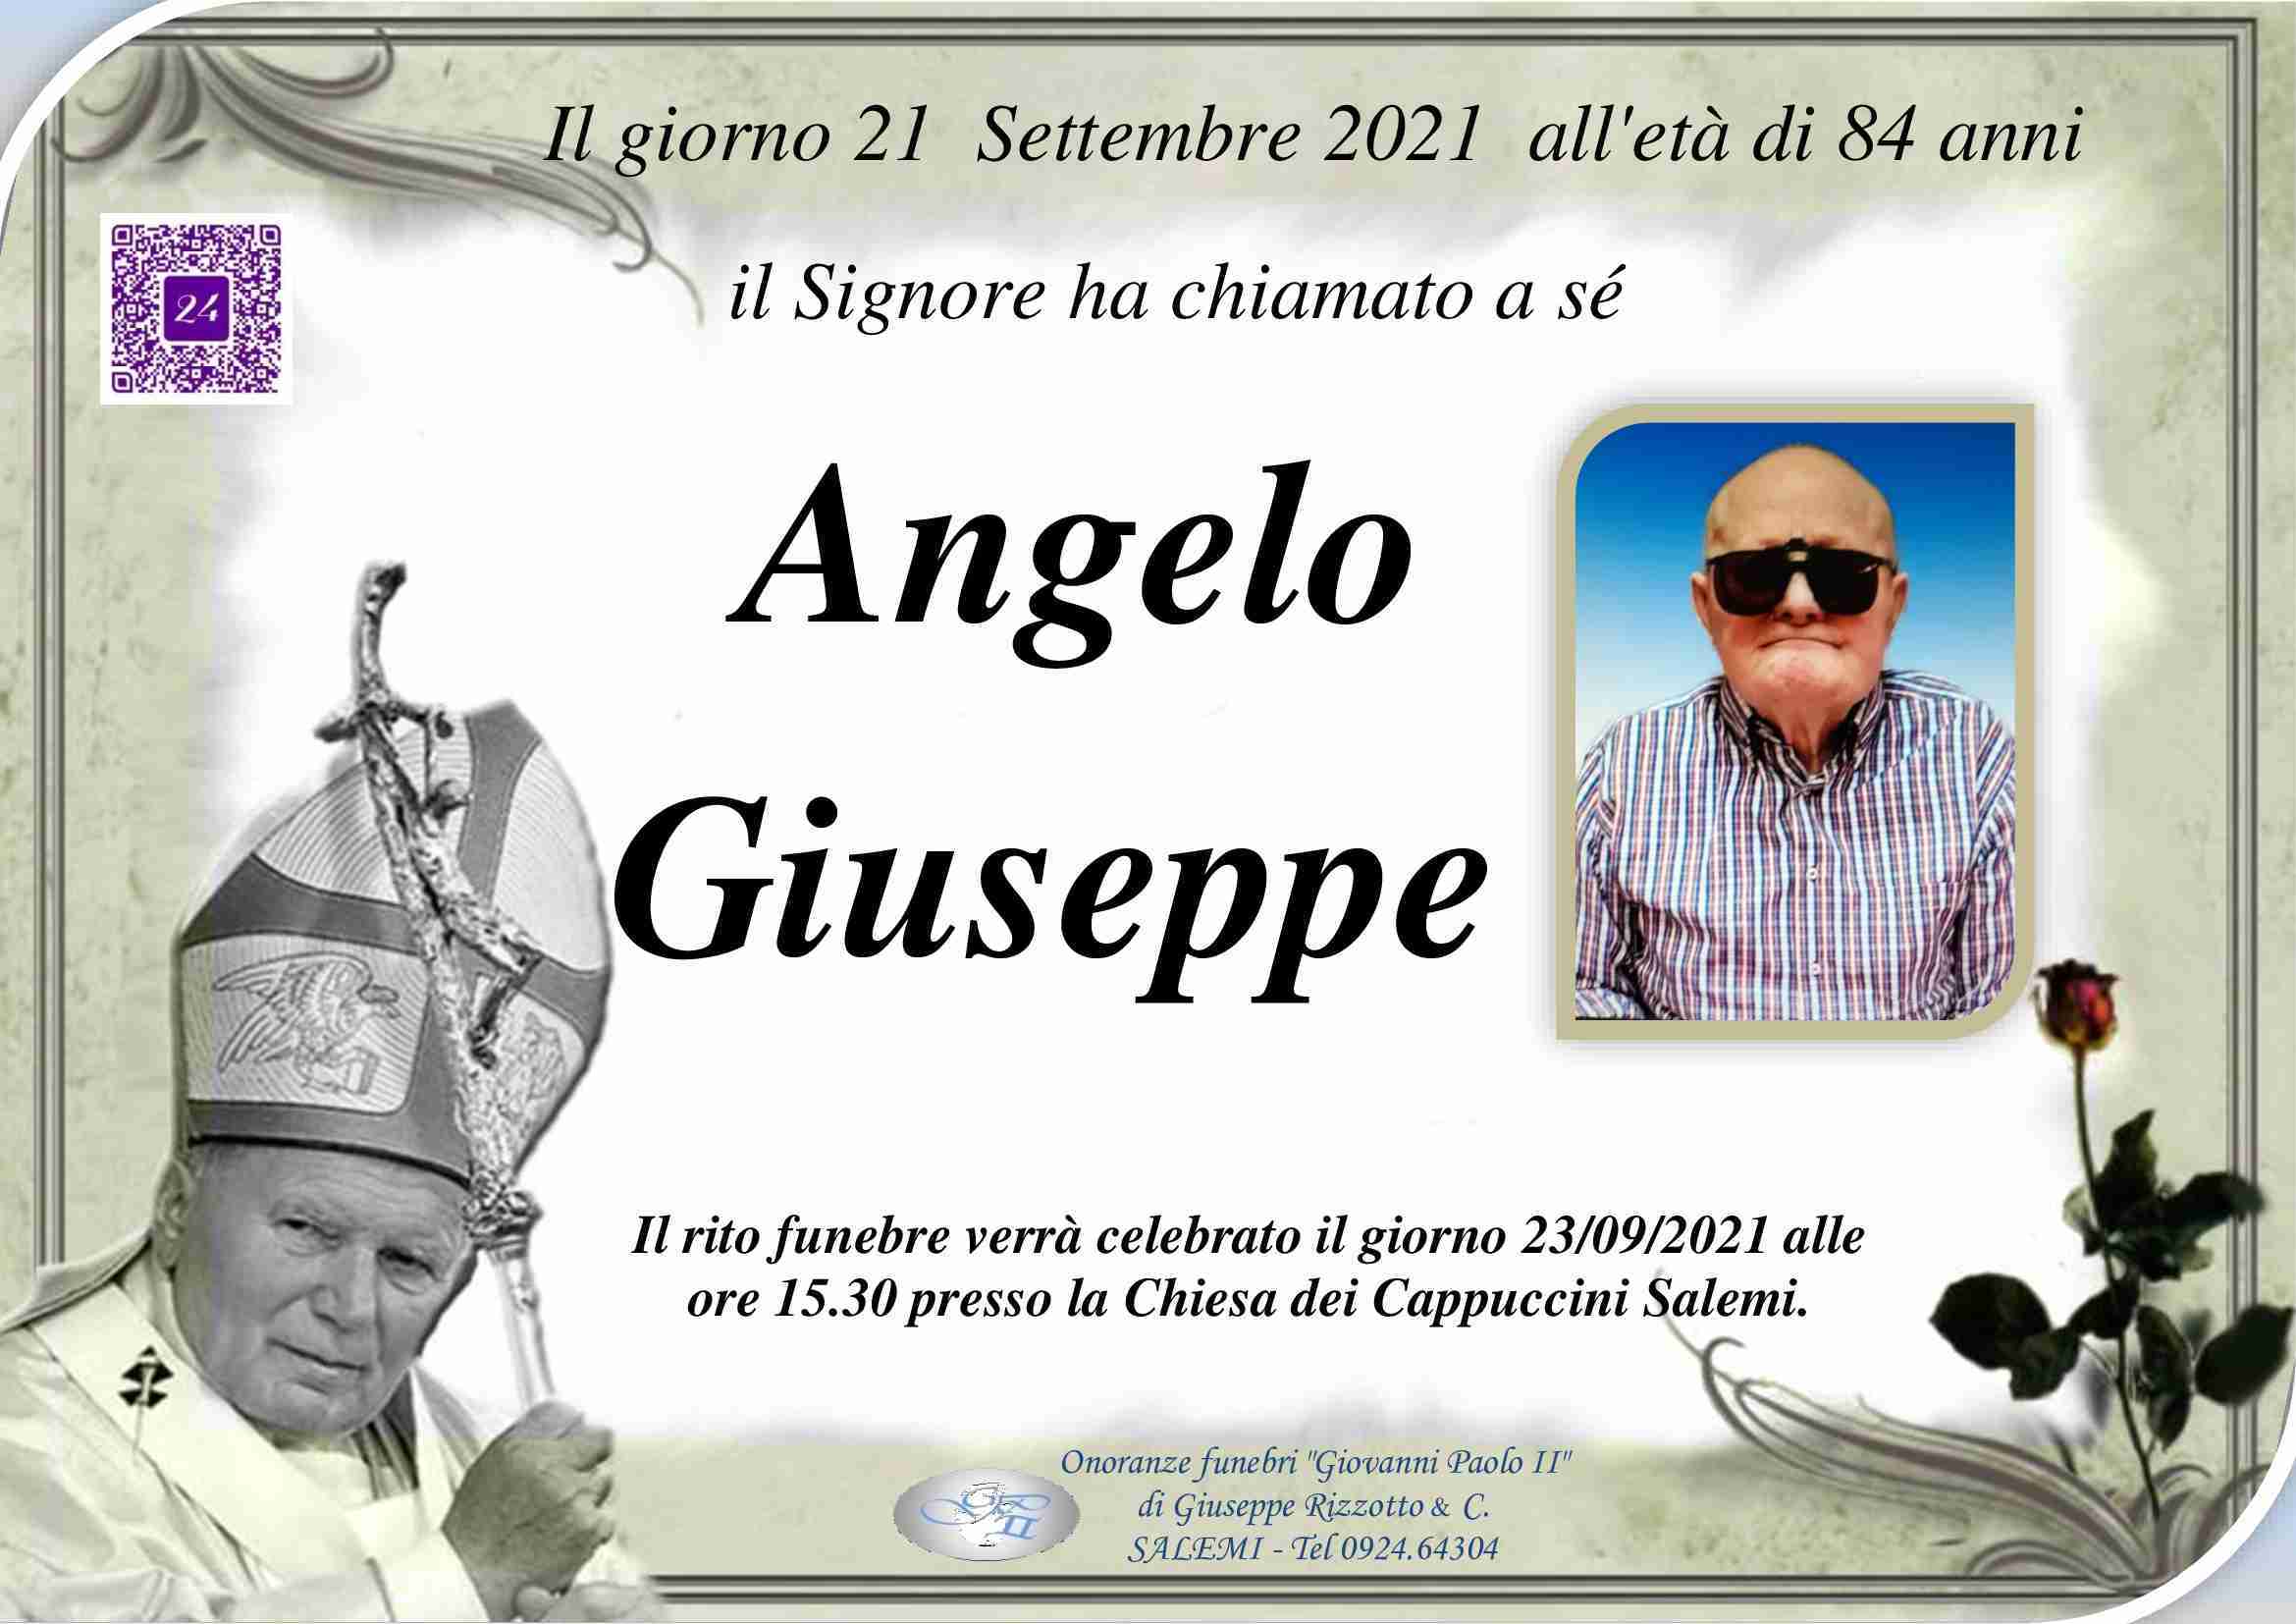 Giuseppe Angelo